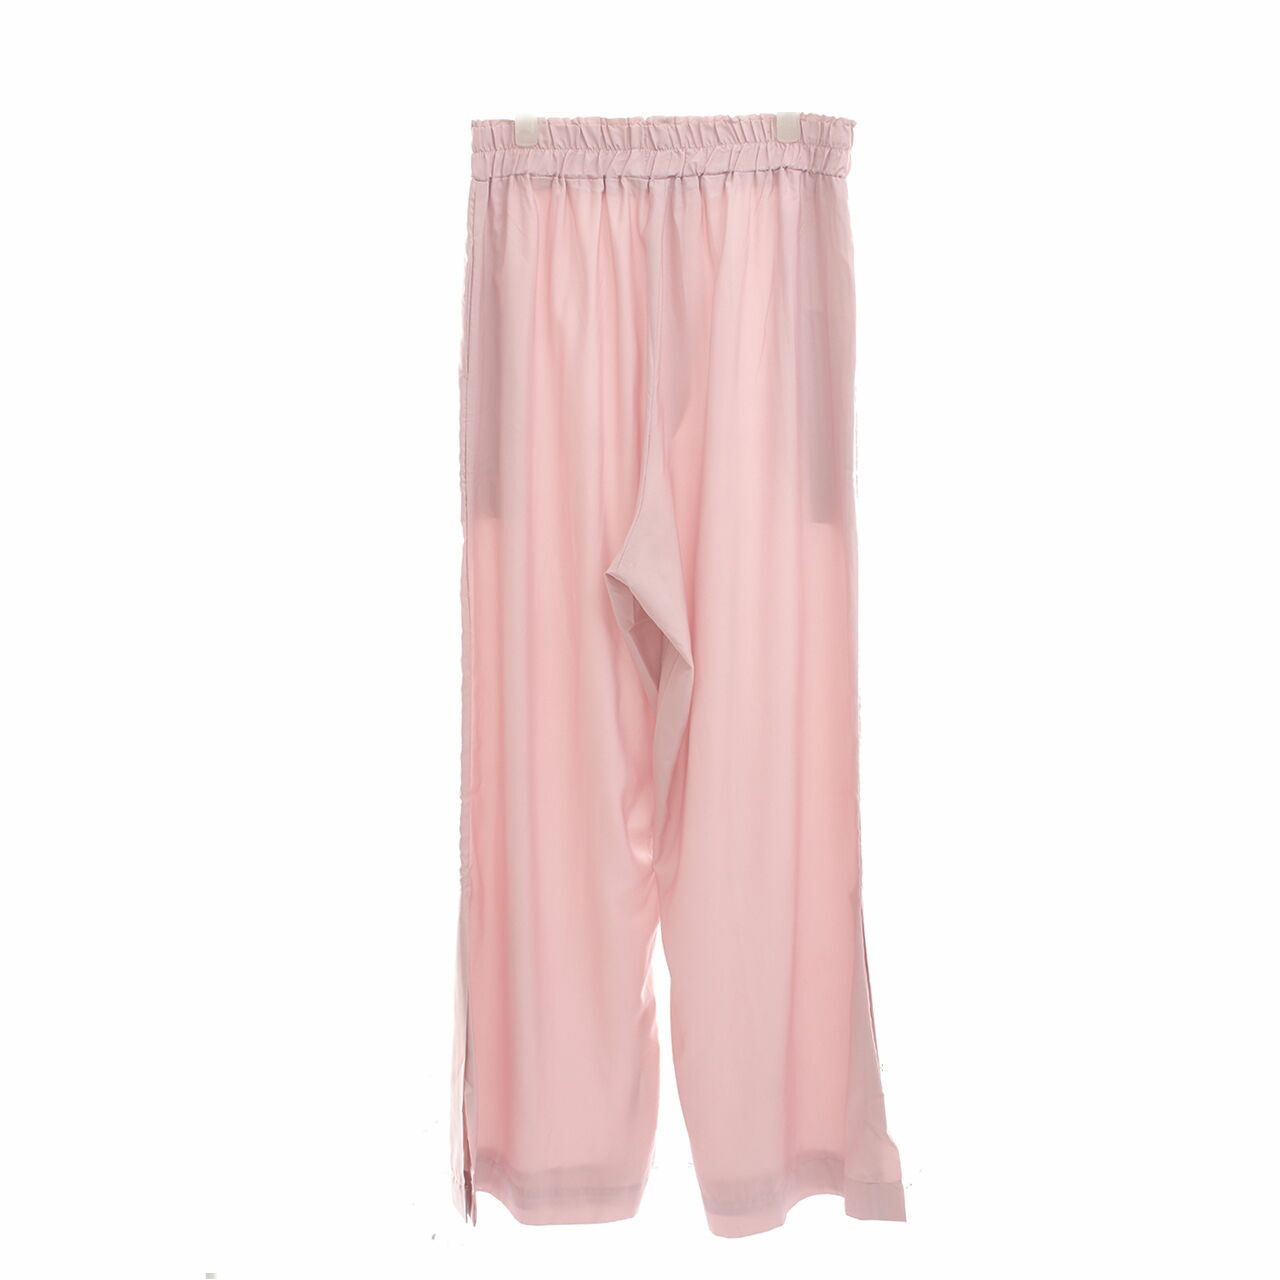 K.A.L.A studio Pink Long Pants